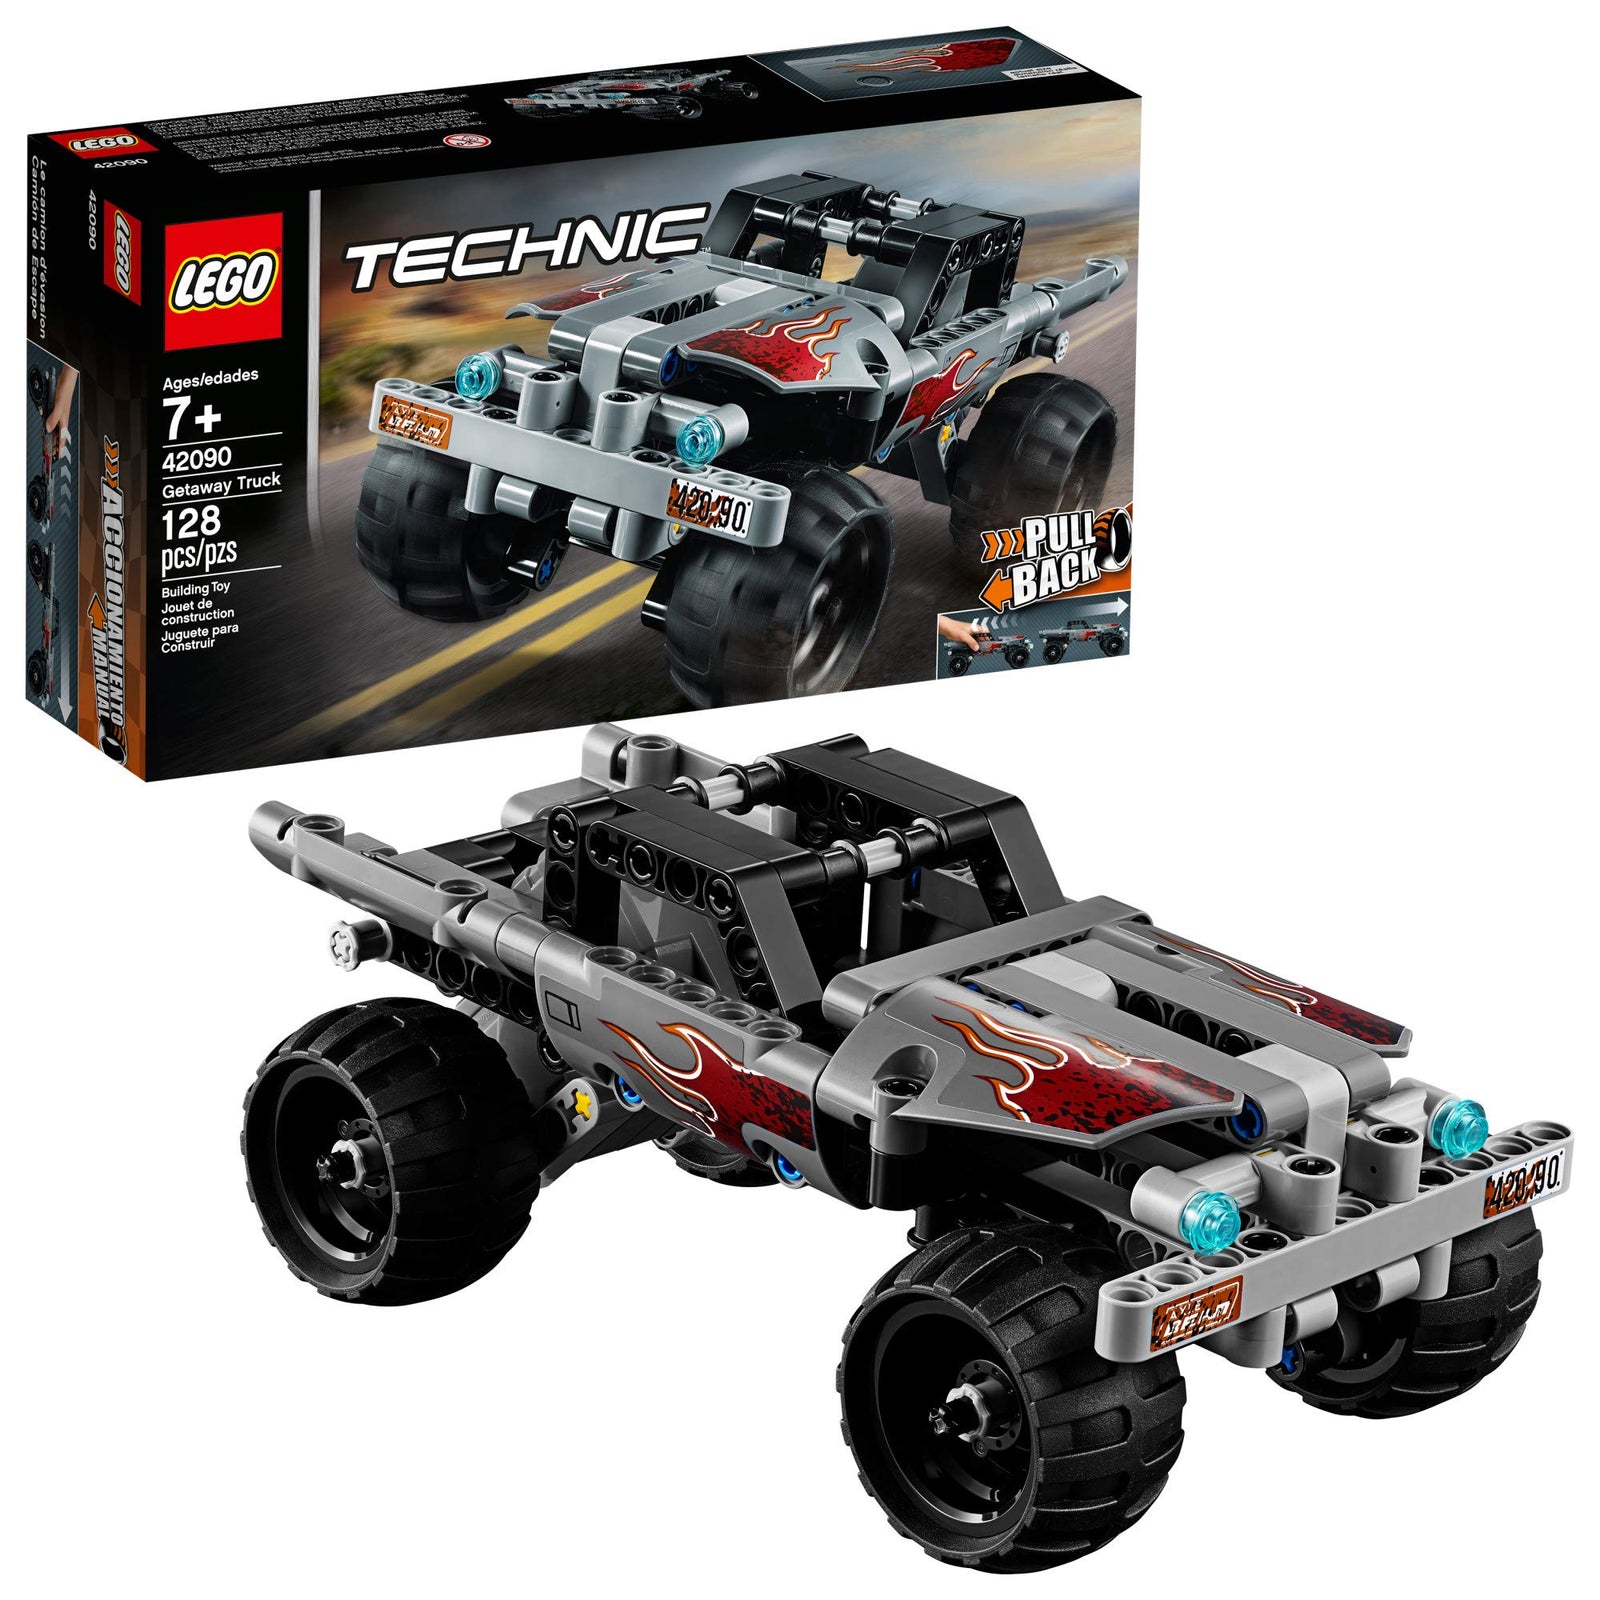 LEGO Technic Getaway Truck 42090 Building Kit (128 Pieces)